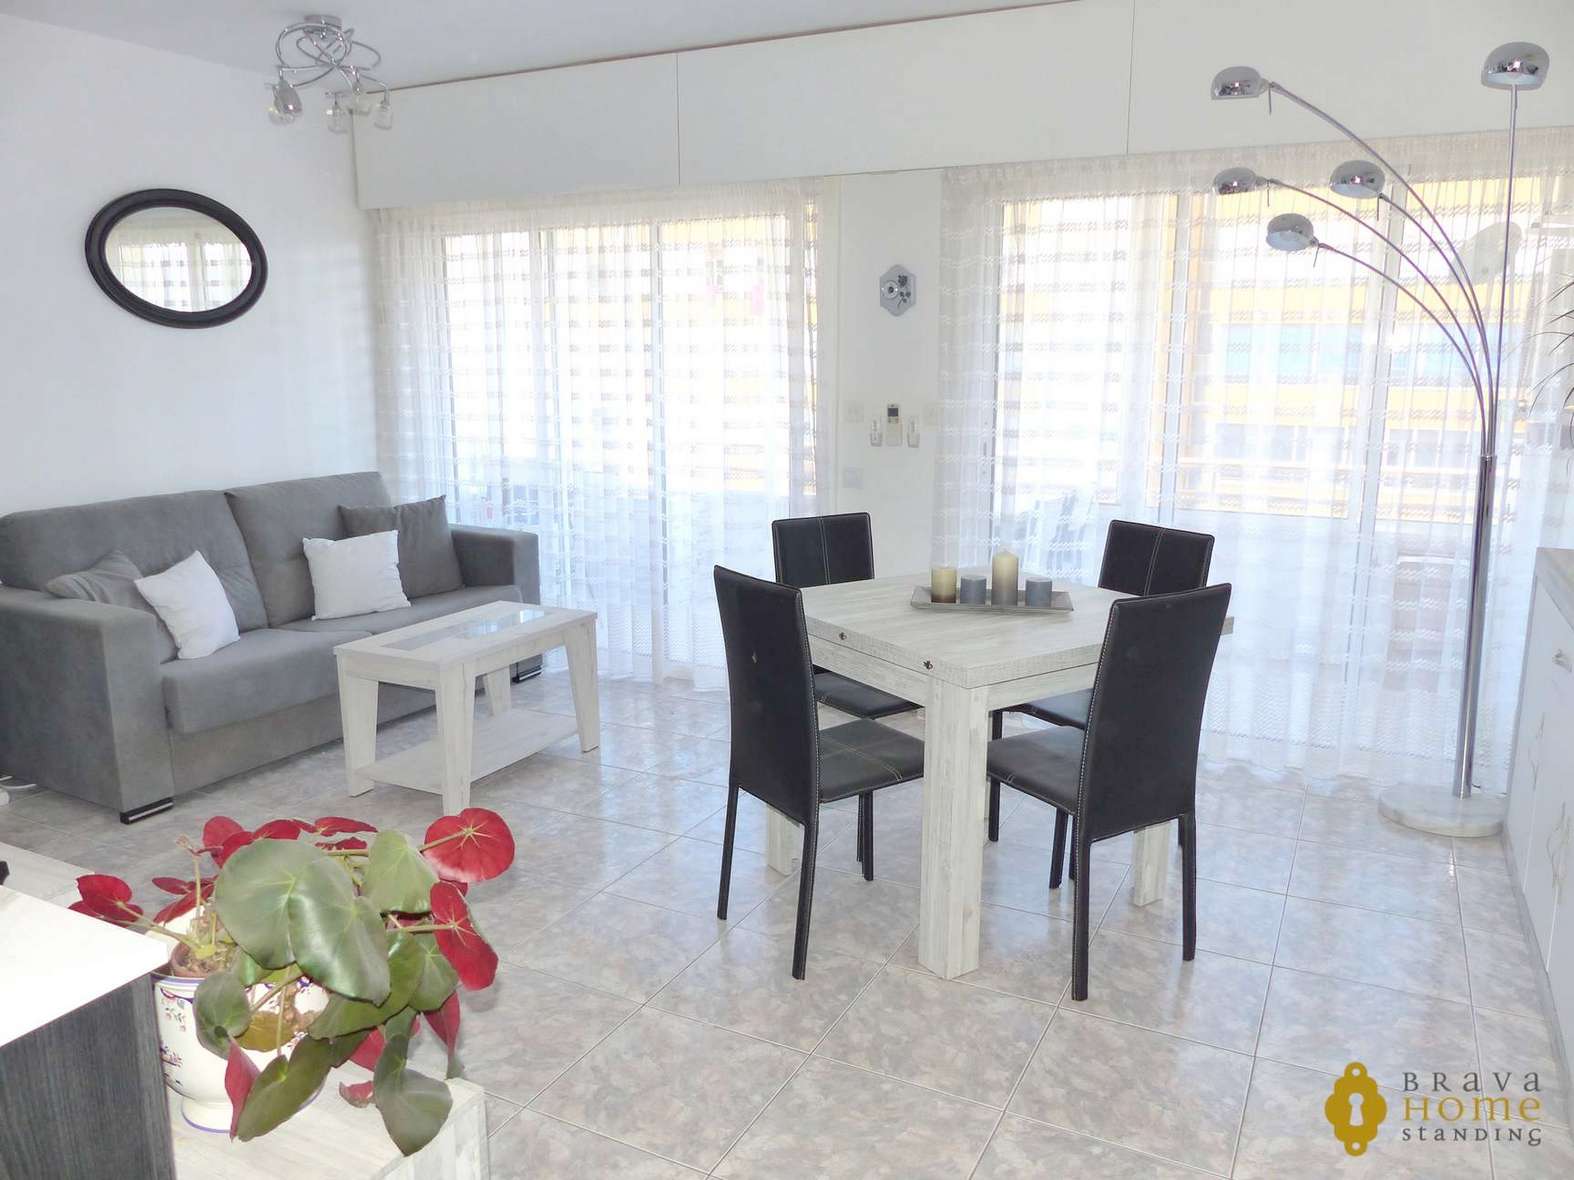 Splendid renovated apartment with sea view, for sale in Santa Margarita